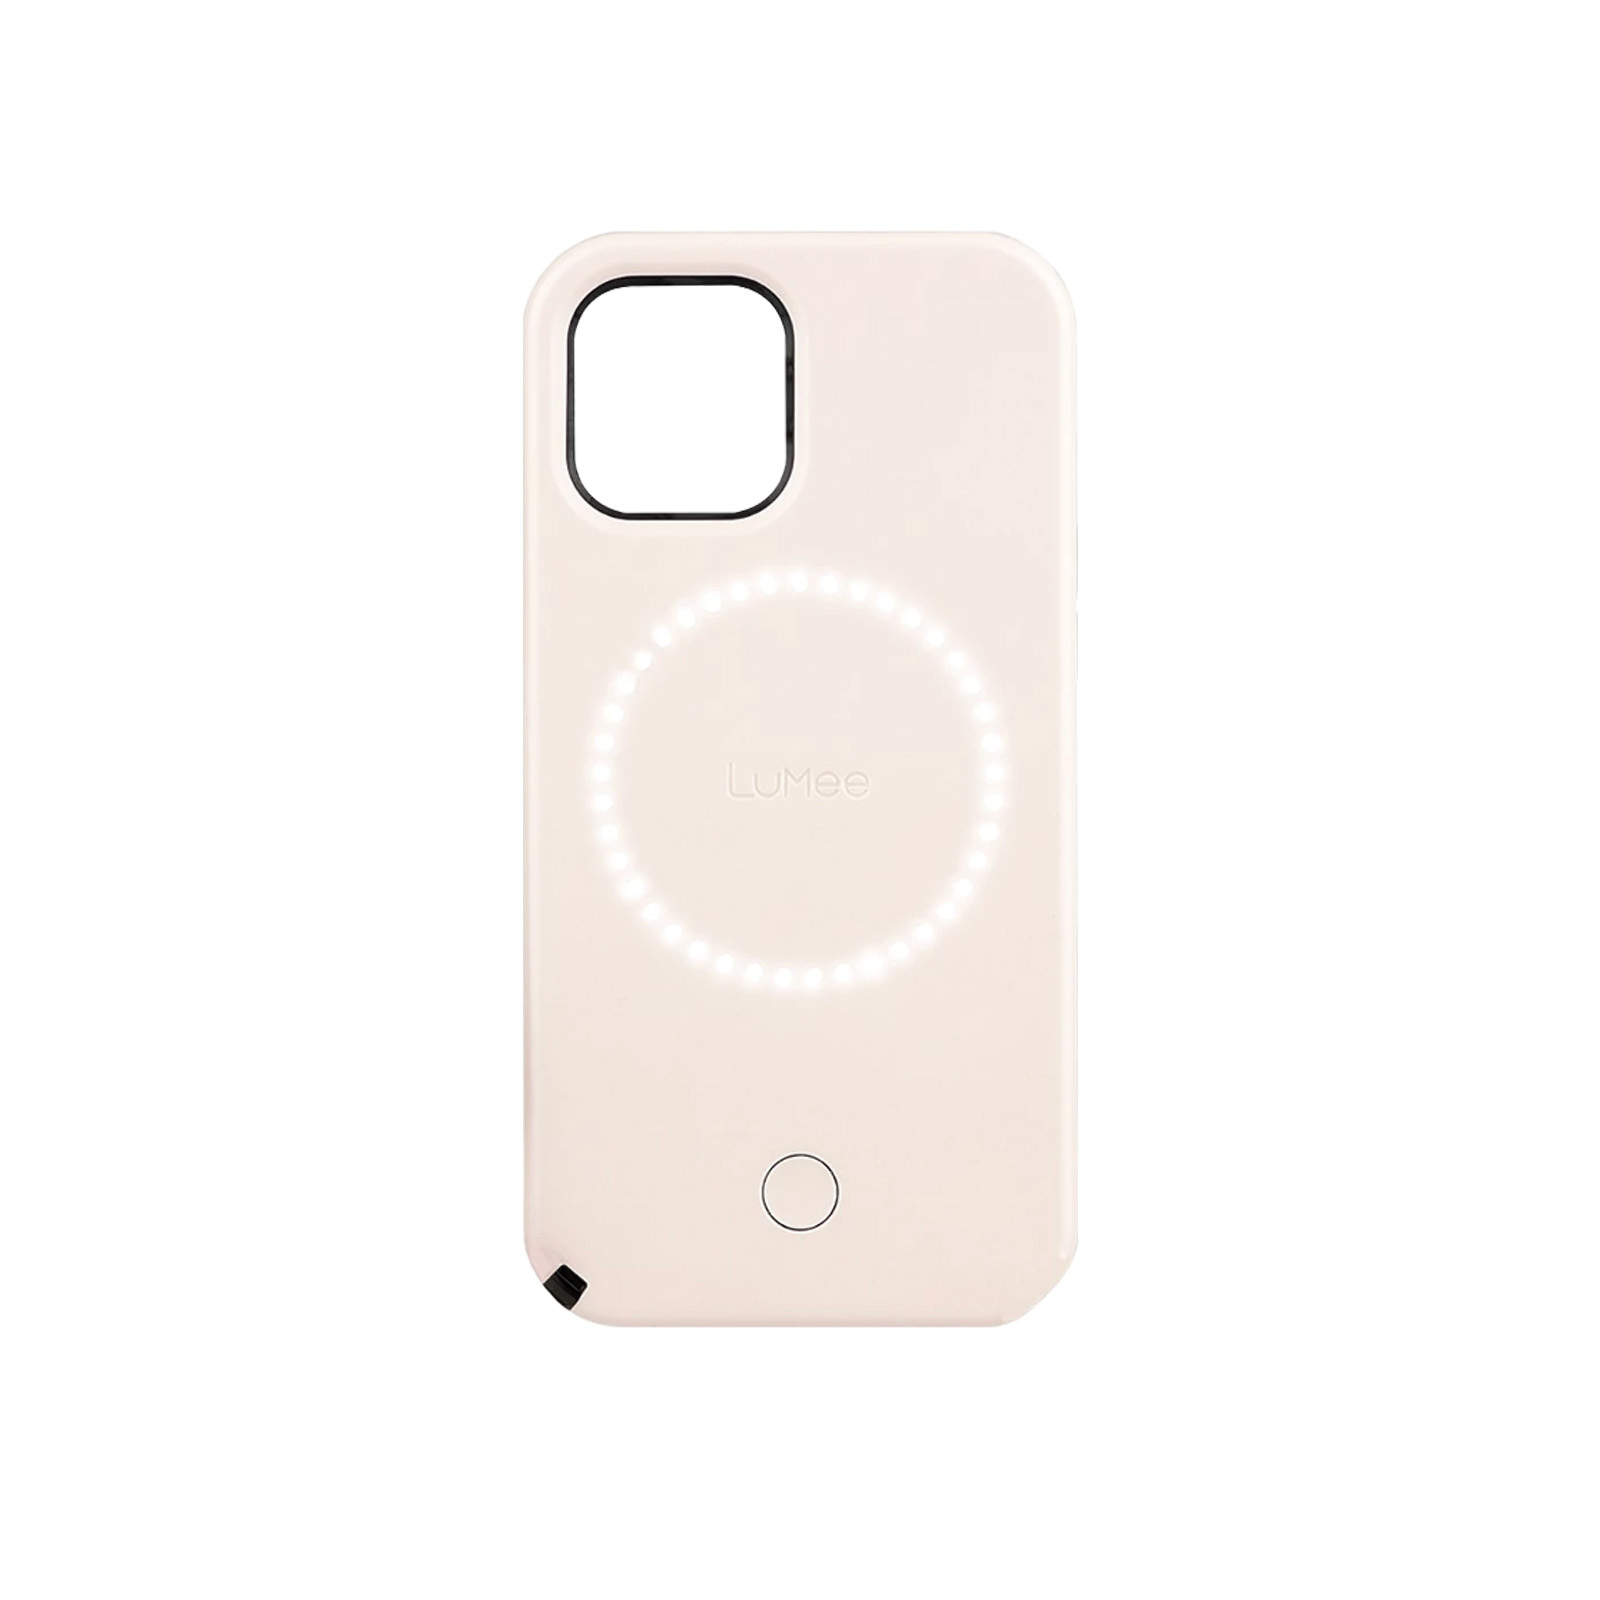 Lumee iPhone 12 Mini]Duo Millenial Pink Case] 